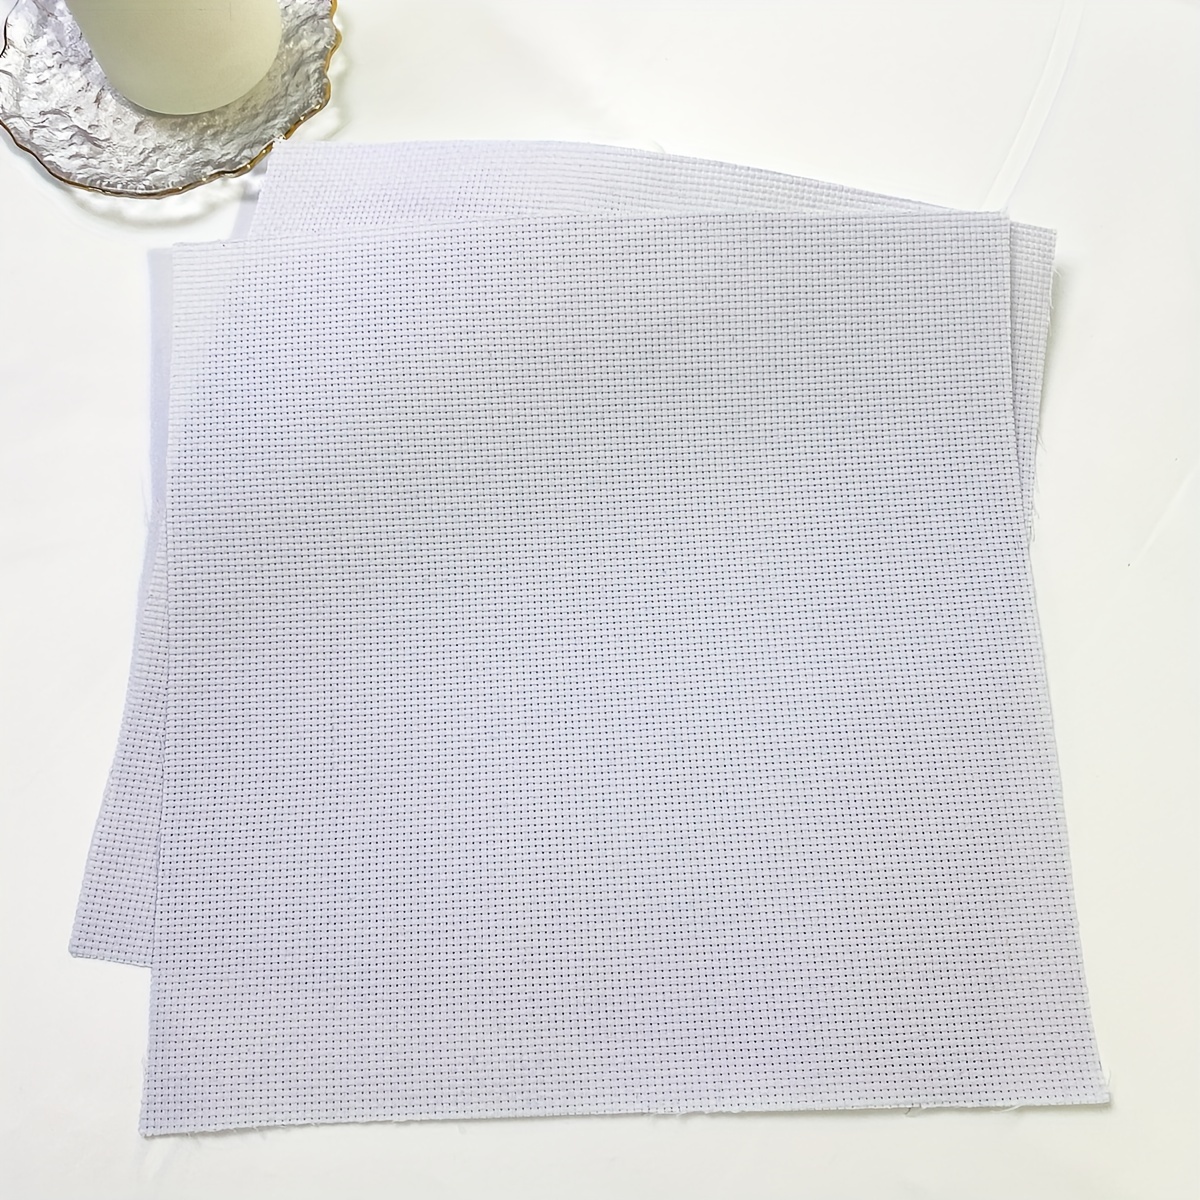 Pale Gray Gingham Cross Stitch Fabric